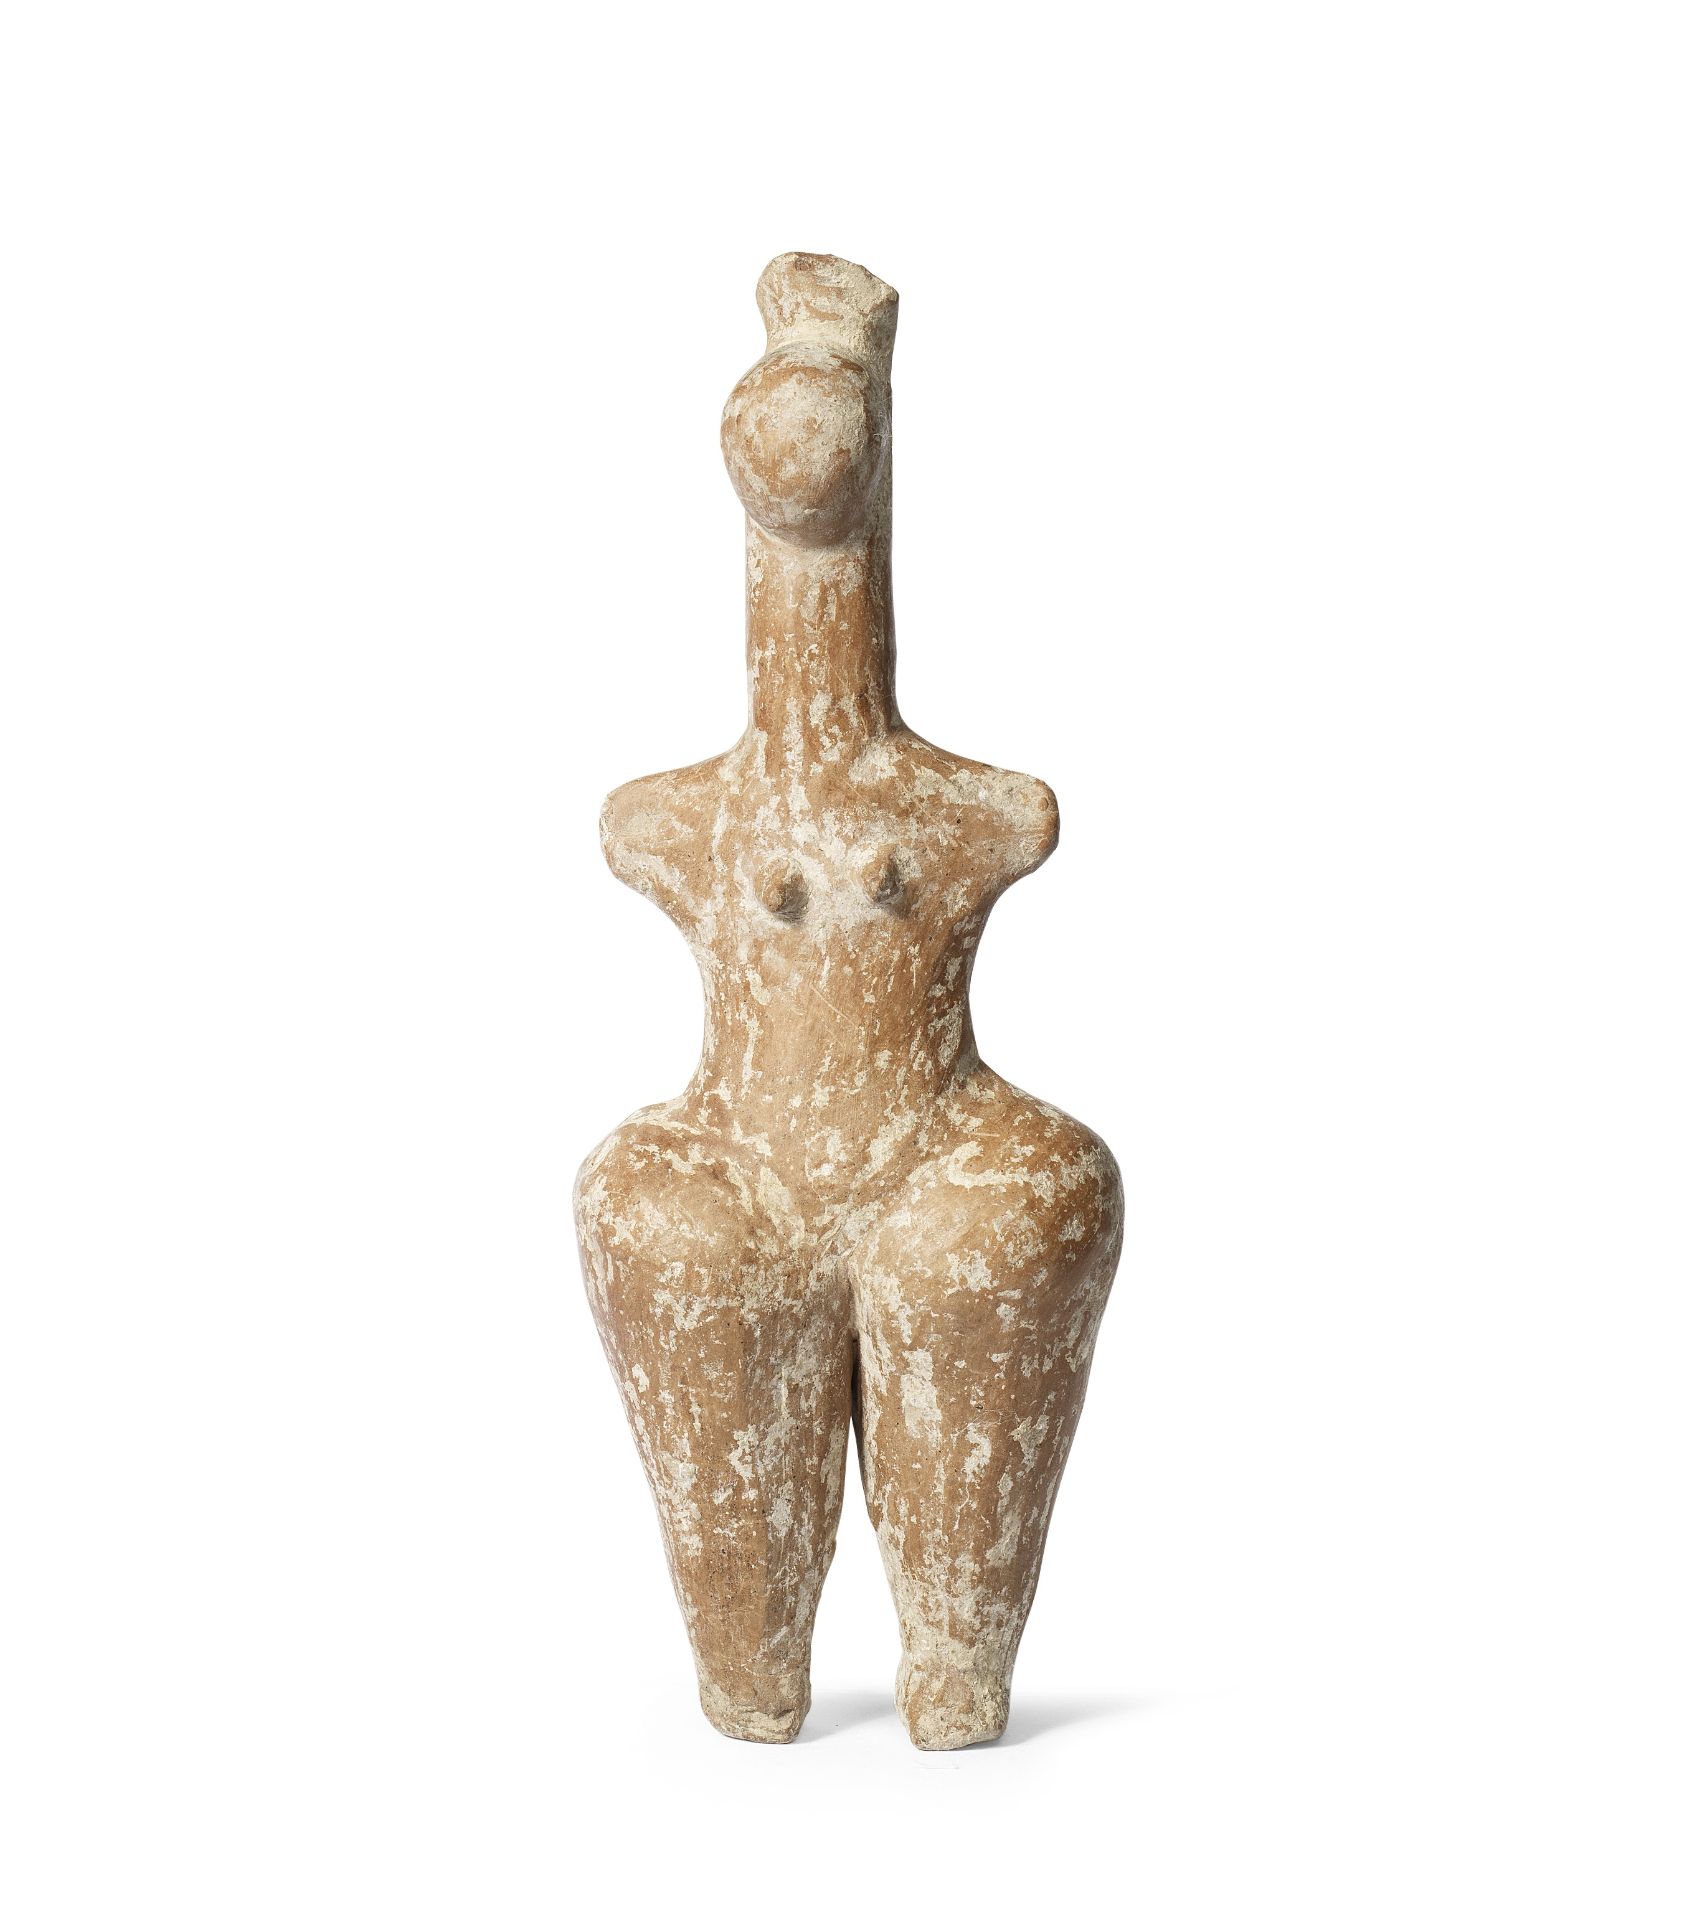 An Amlash terracotta steatophygous figure